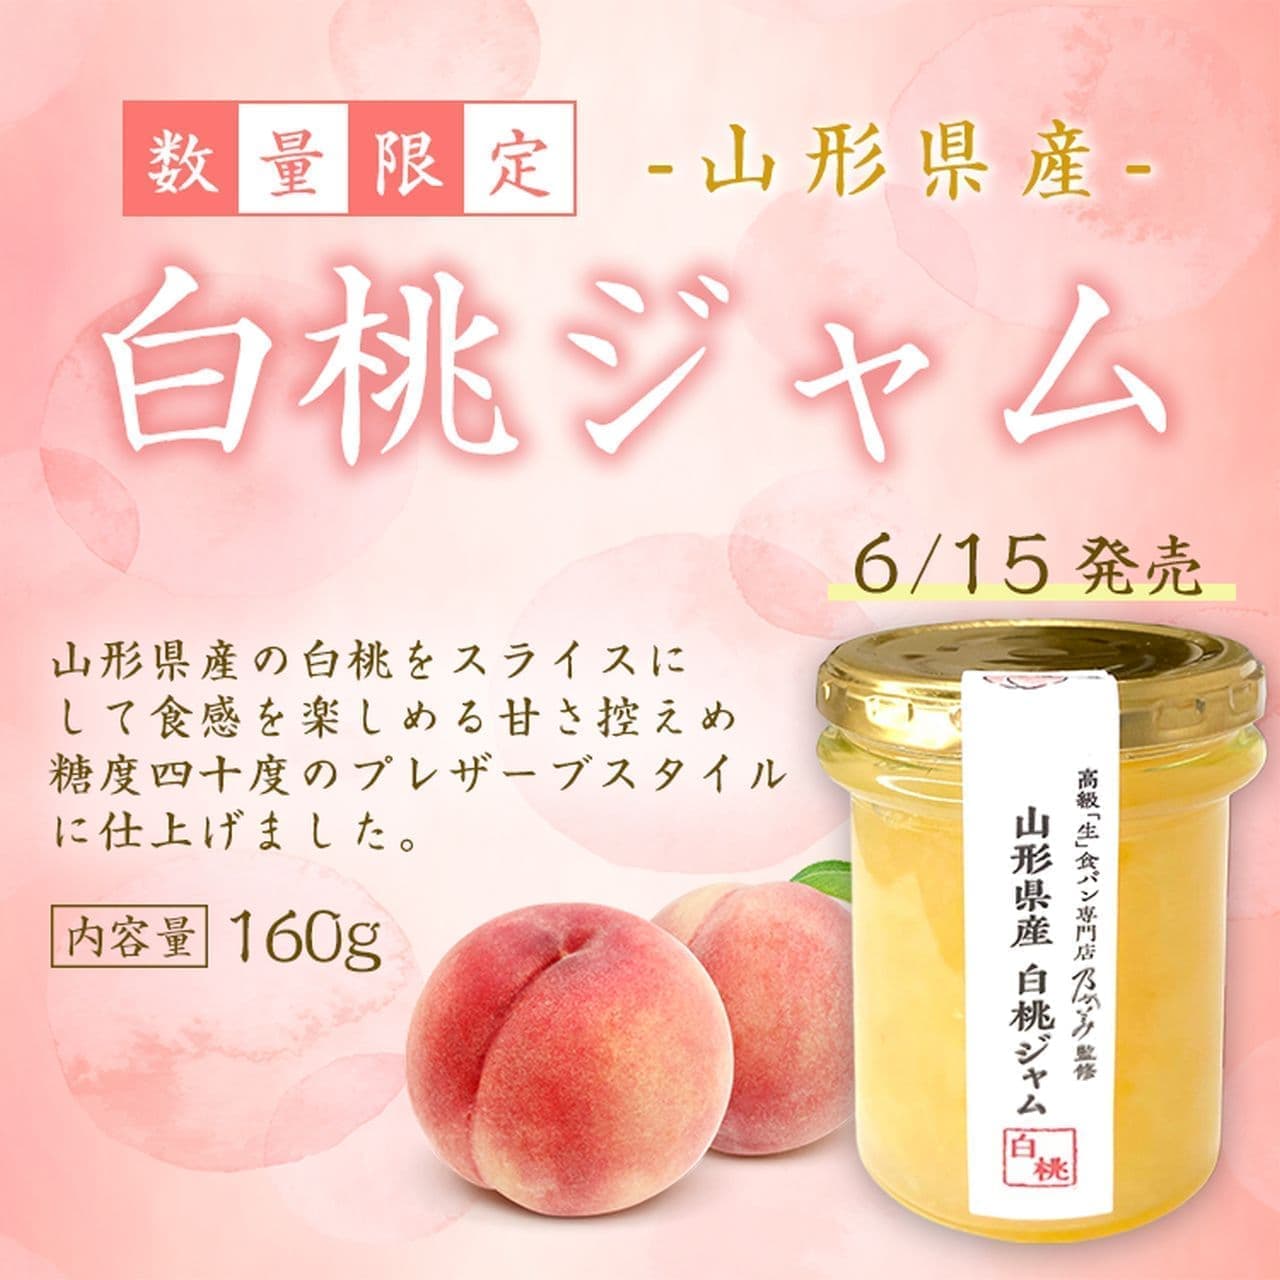 Nogami "Yamagata white peach jam